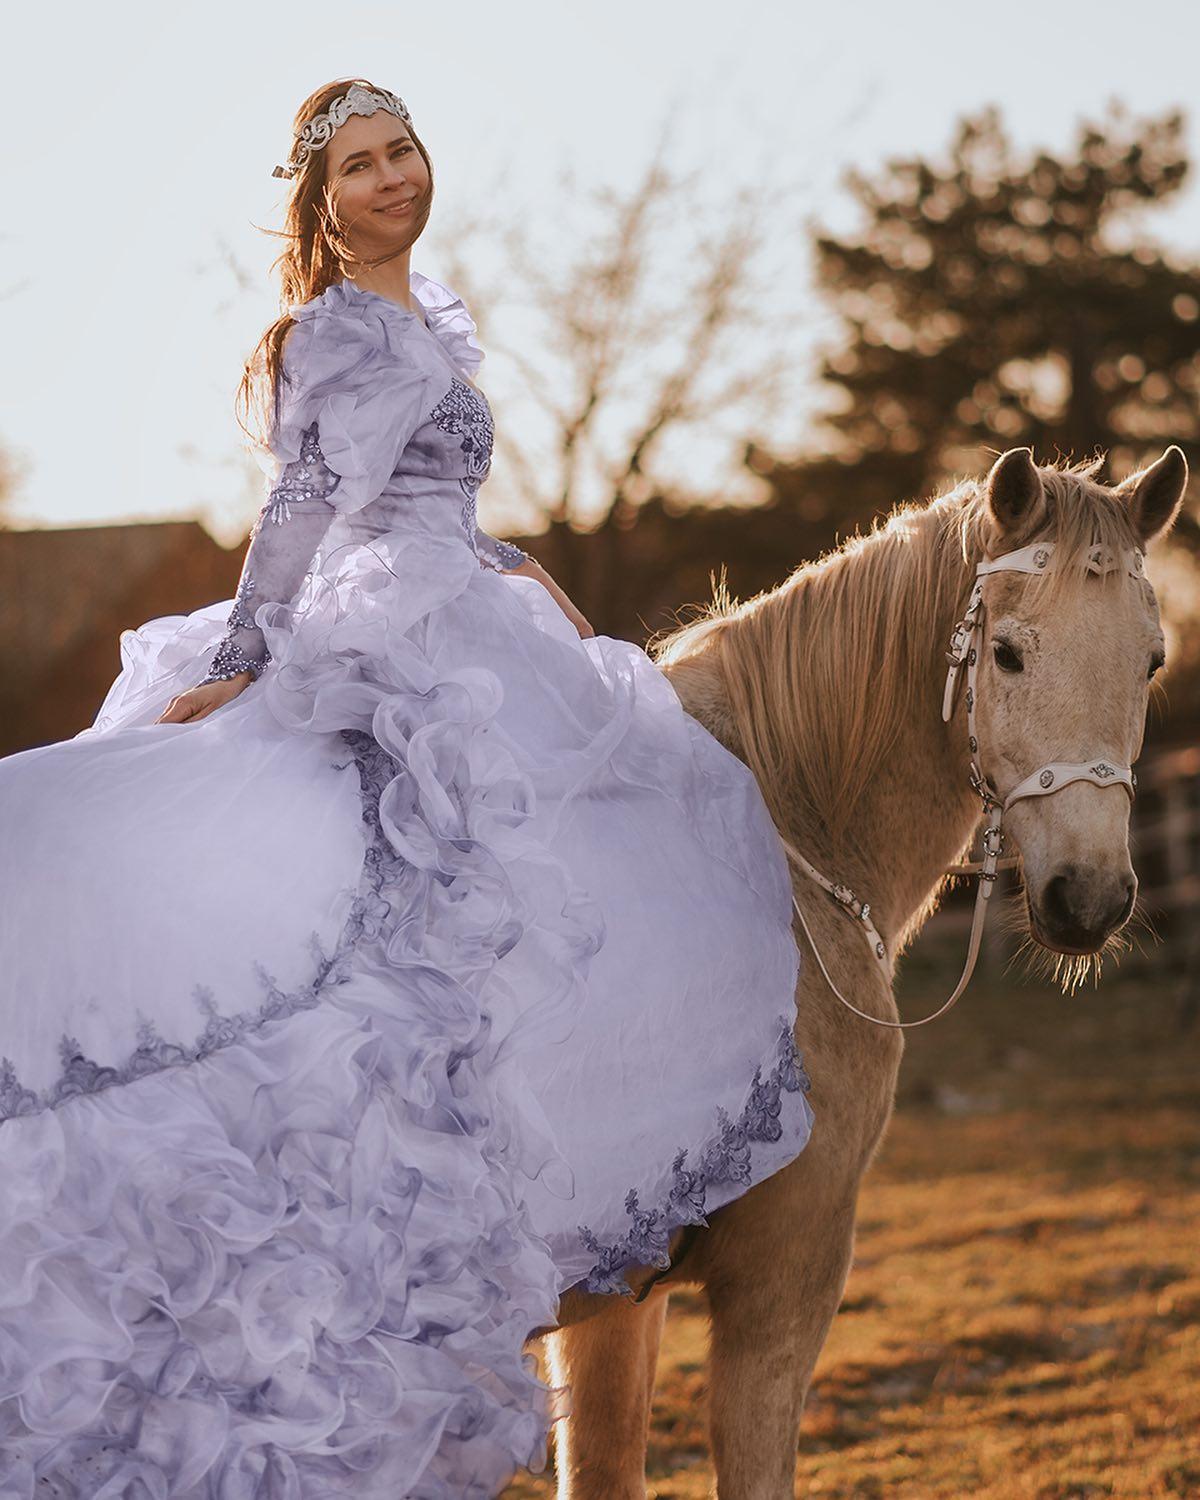 (Courtesy of <a href="https://www.instagram.com/equestriankasiabukowska/">Kasia Bukowska</a>)